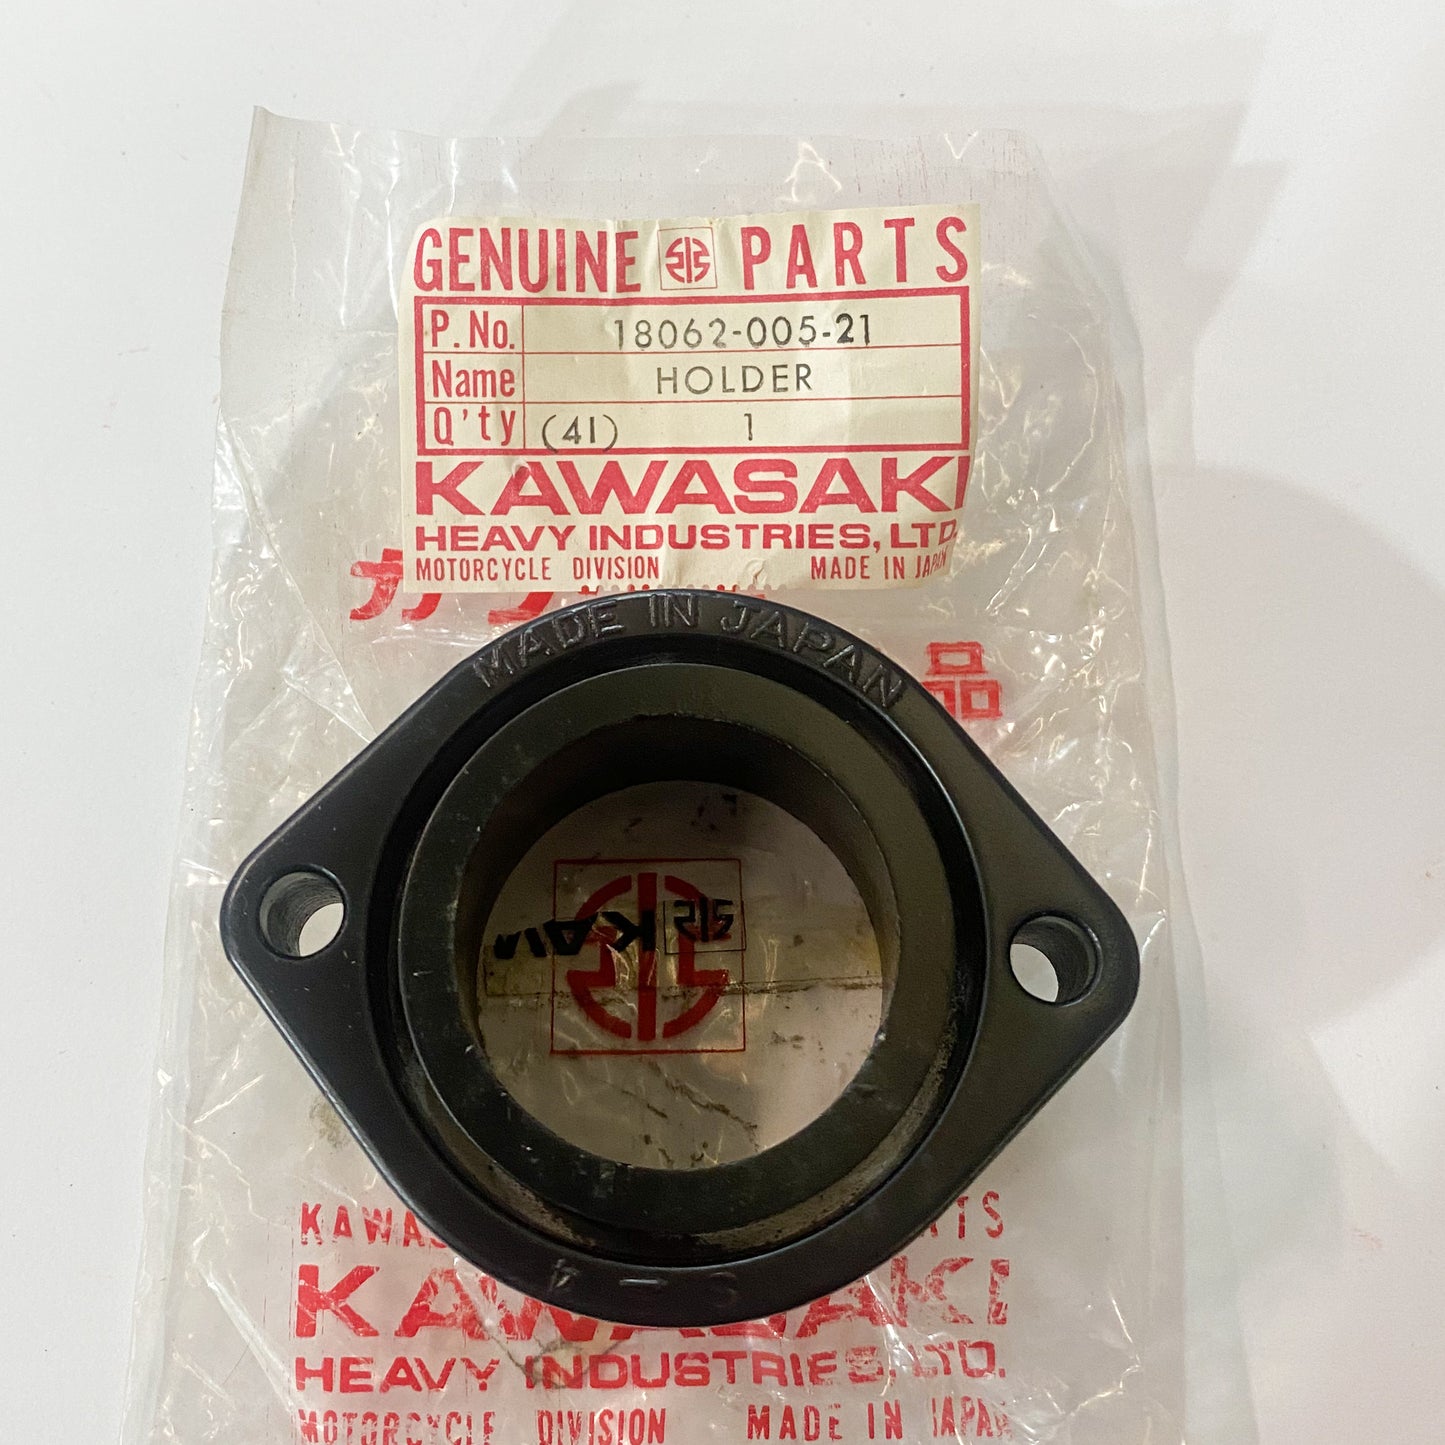 KAWASAKI HOLDER-EXH PIPE,BLACK 18062-005-21